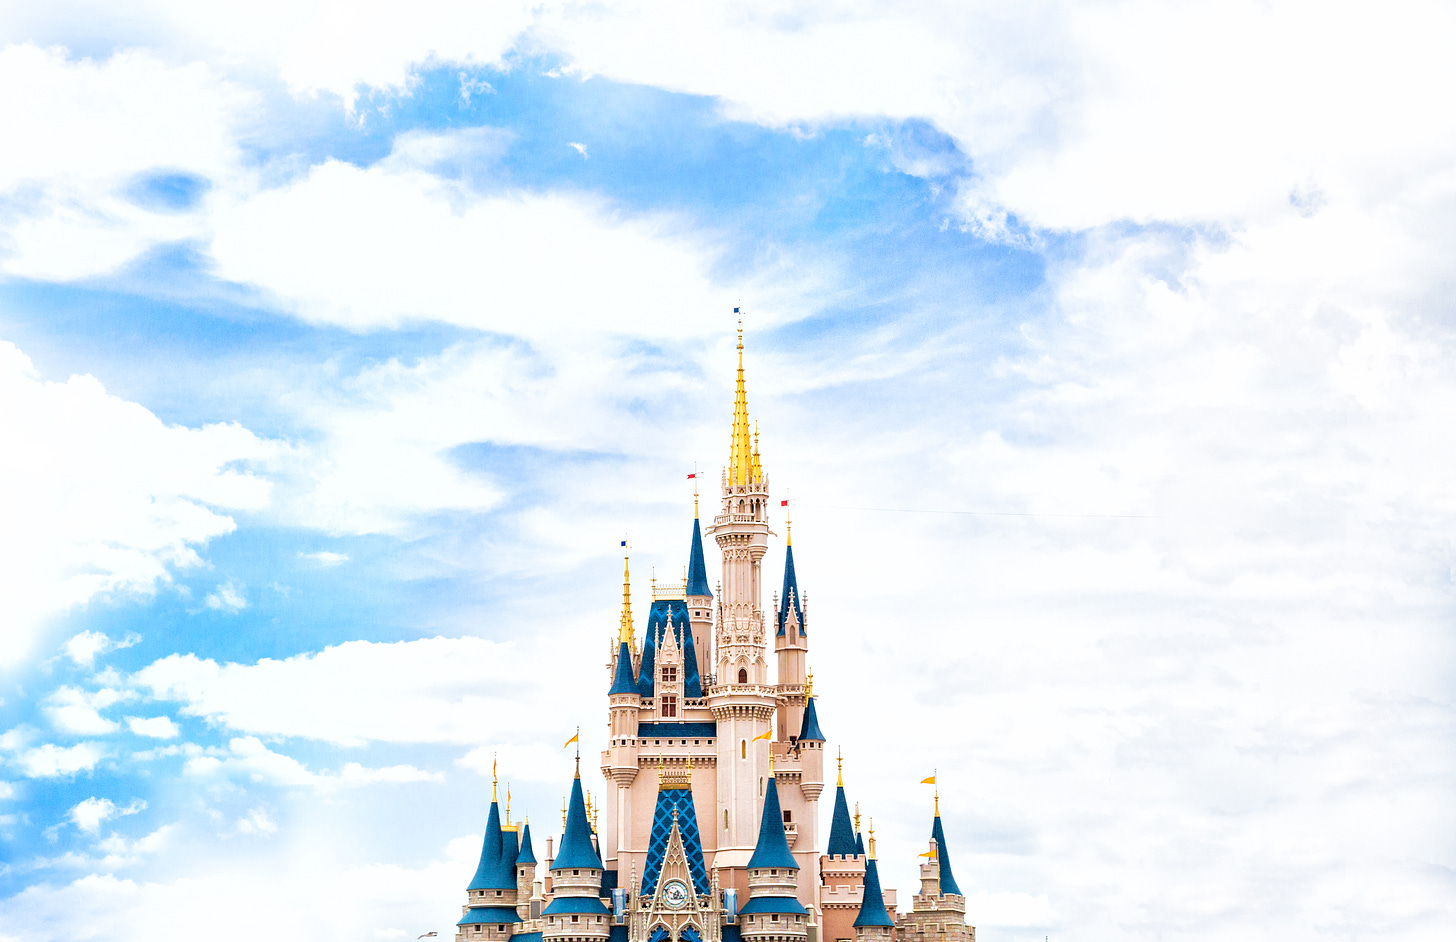 A photo of Sleeping Beauty's Castle at Disneyland.